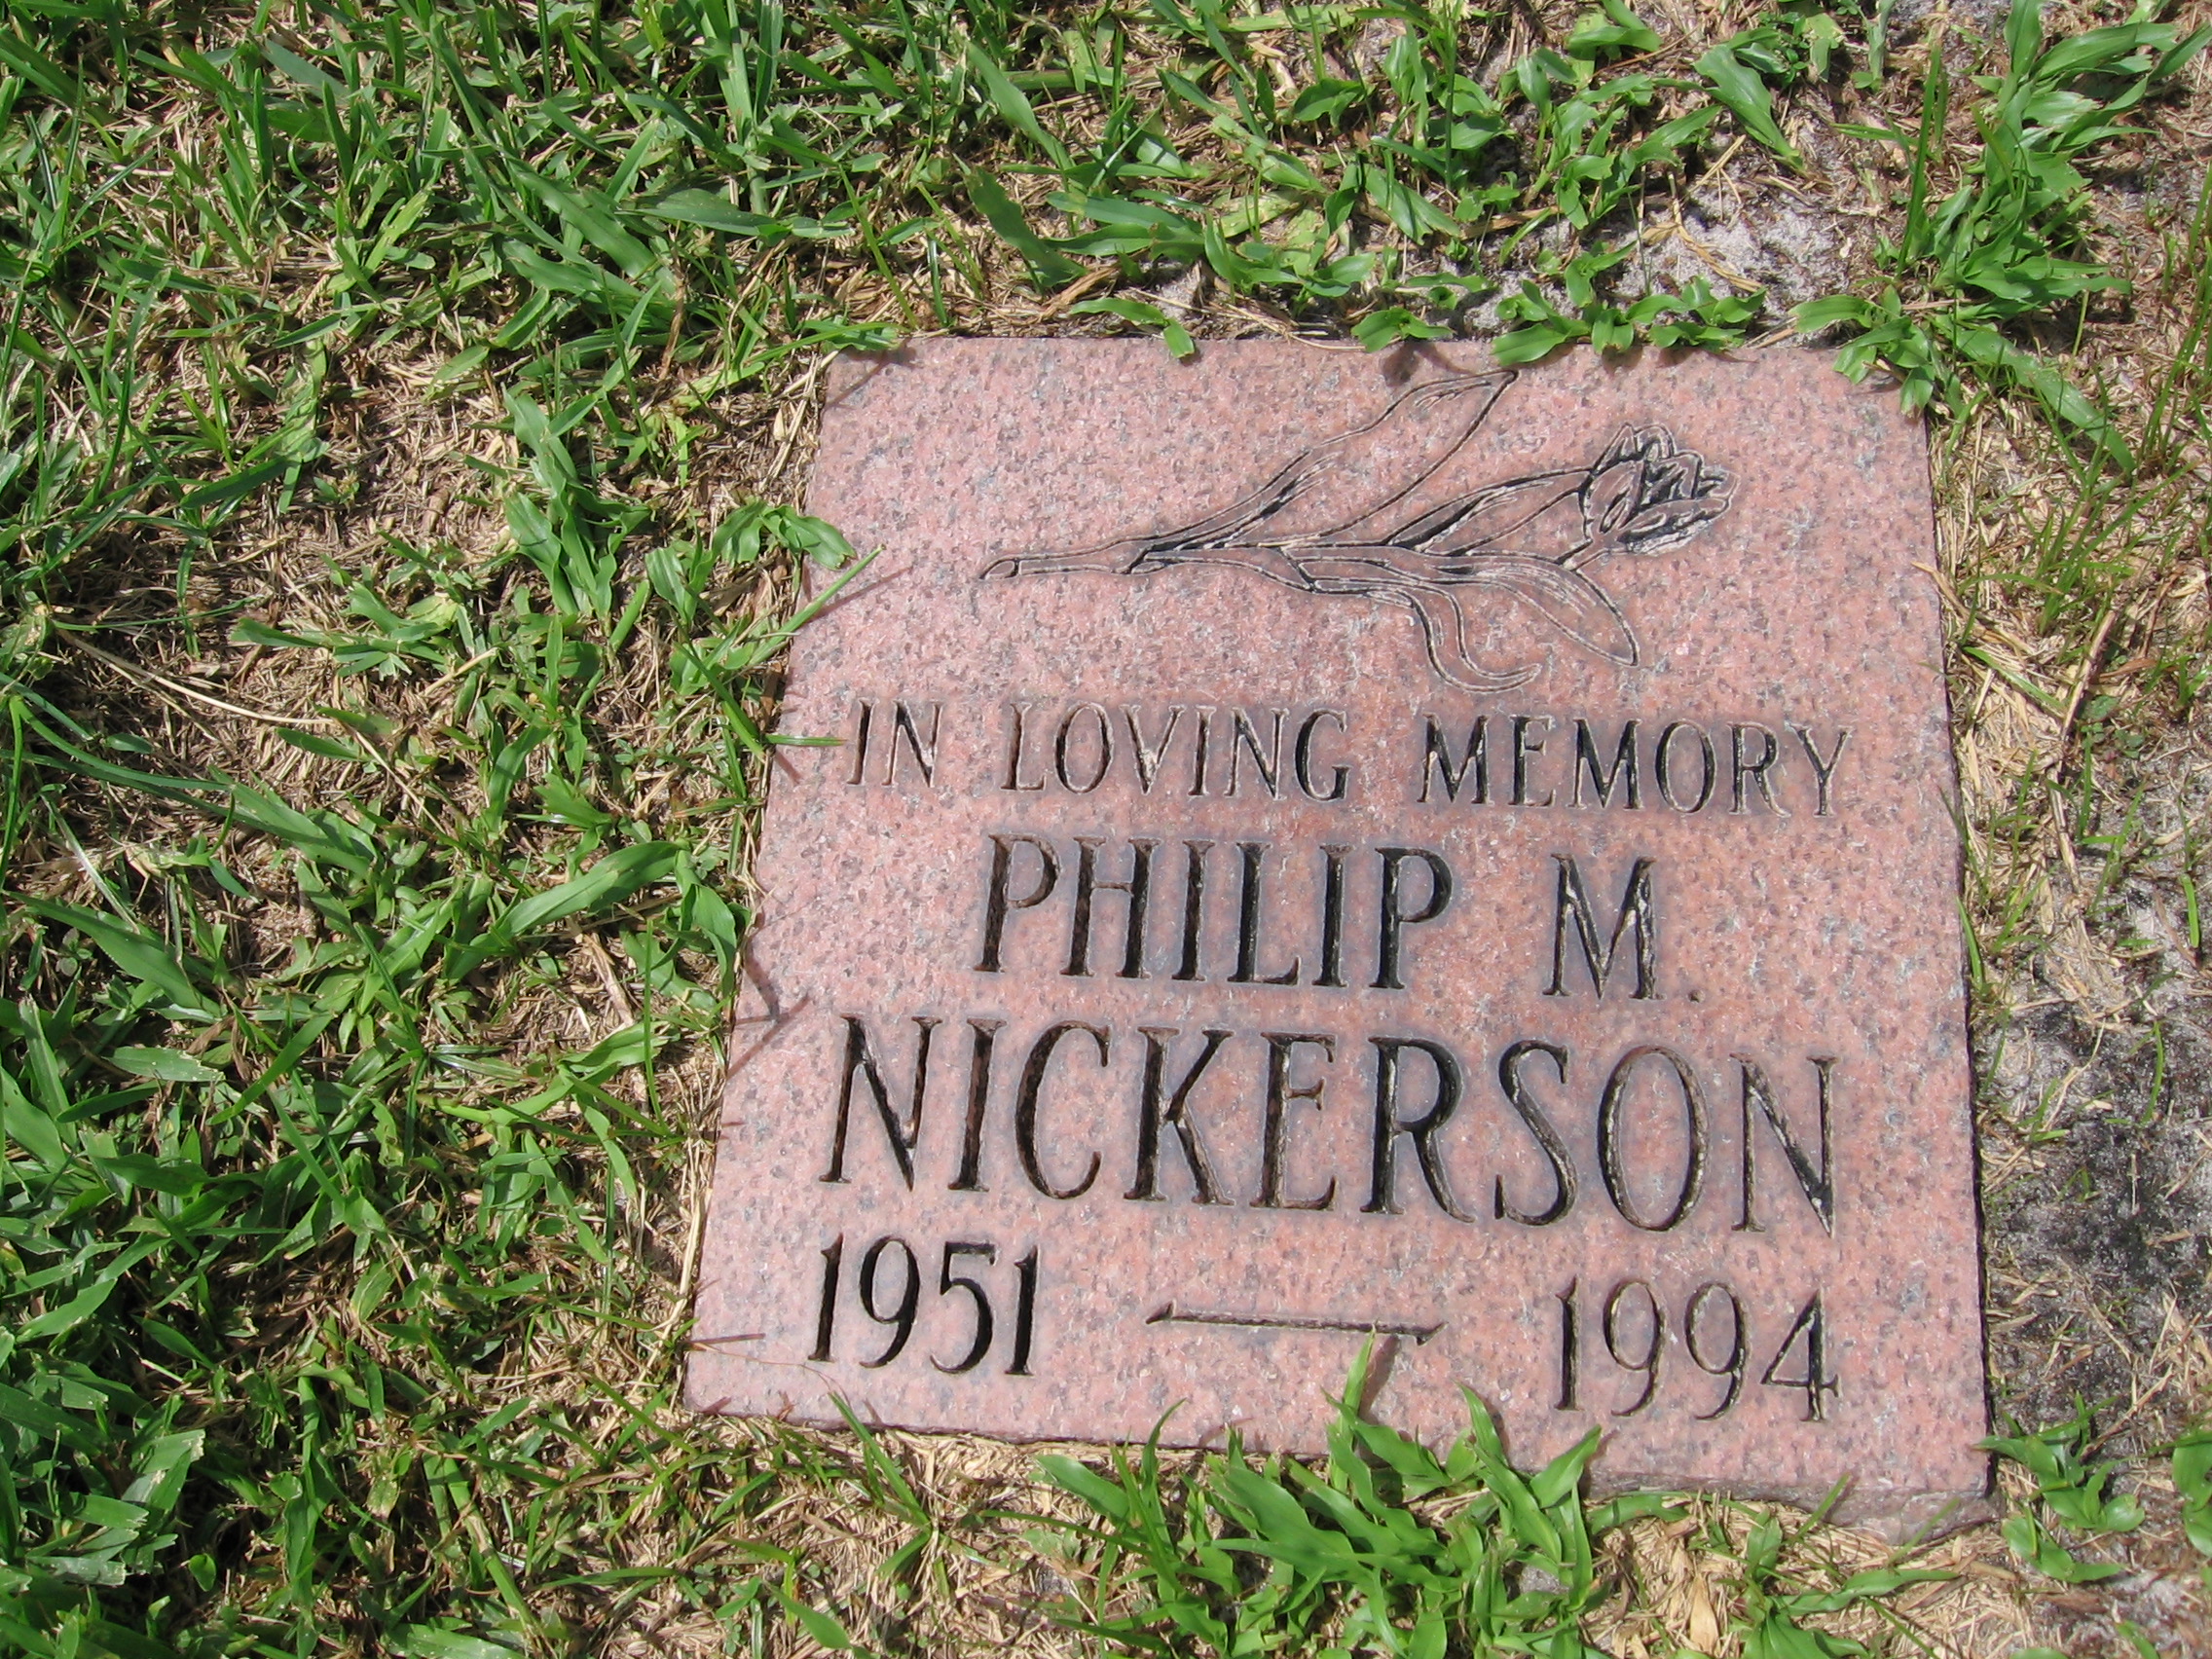 Philip M Nickerson